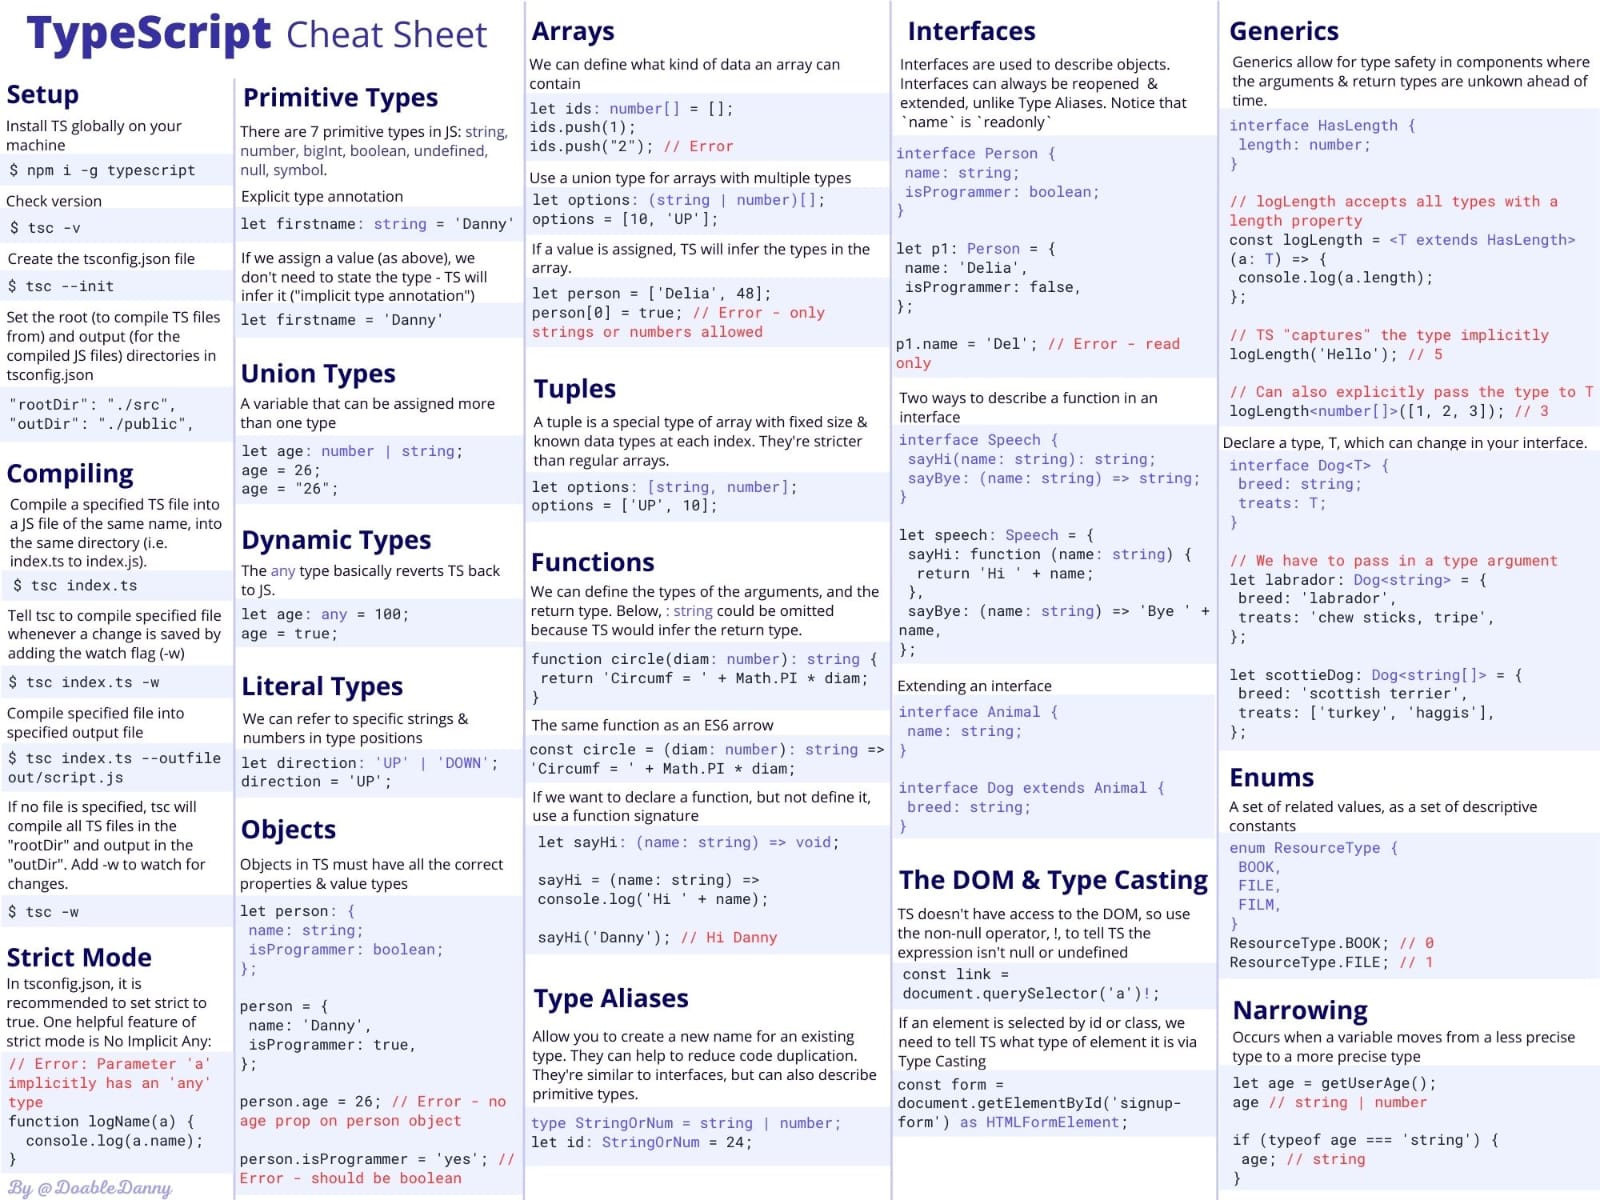 TypeScript Cheetsheet